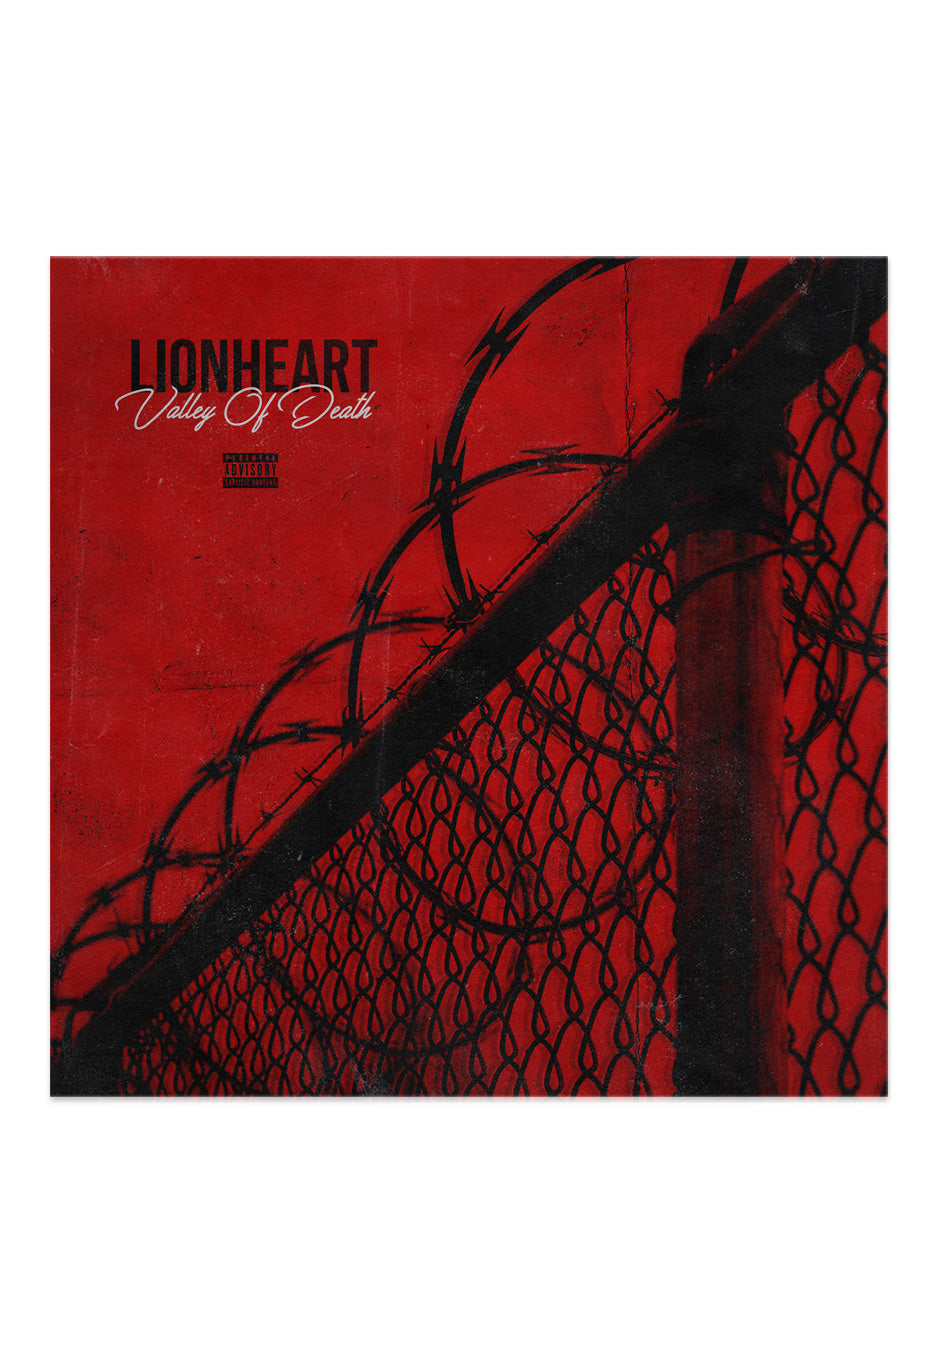 Lionheart - Valley Of Death - Digipak CD